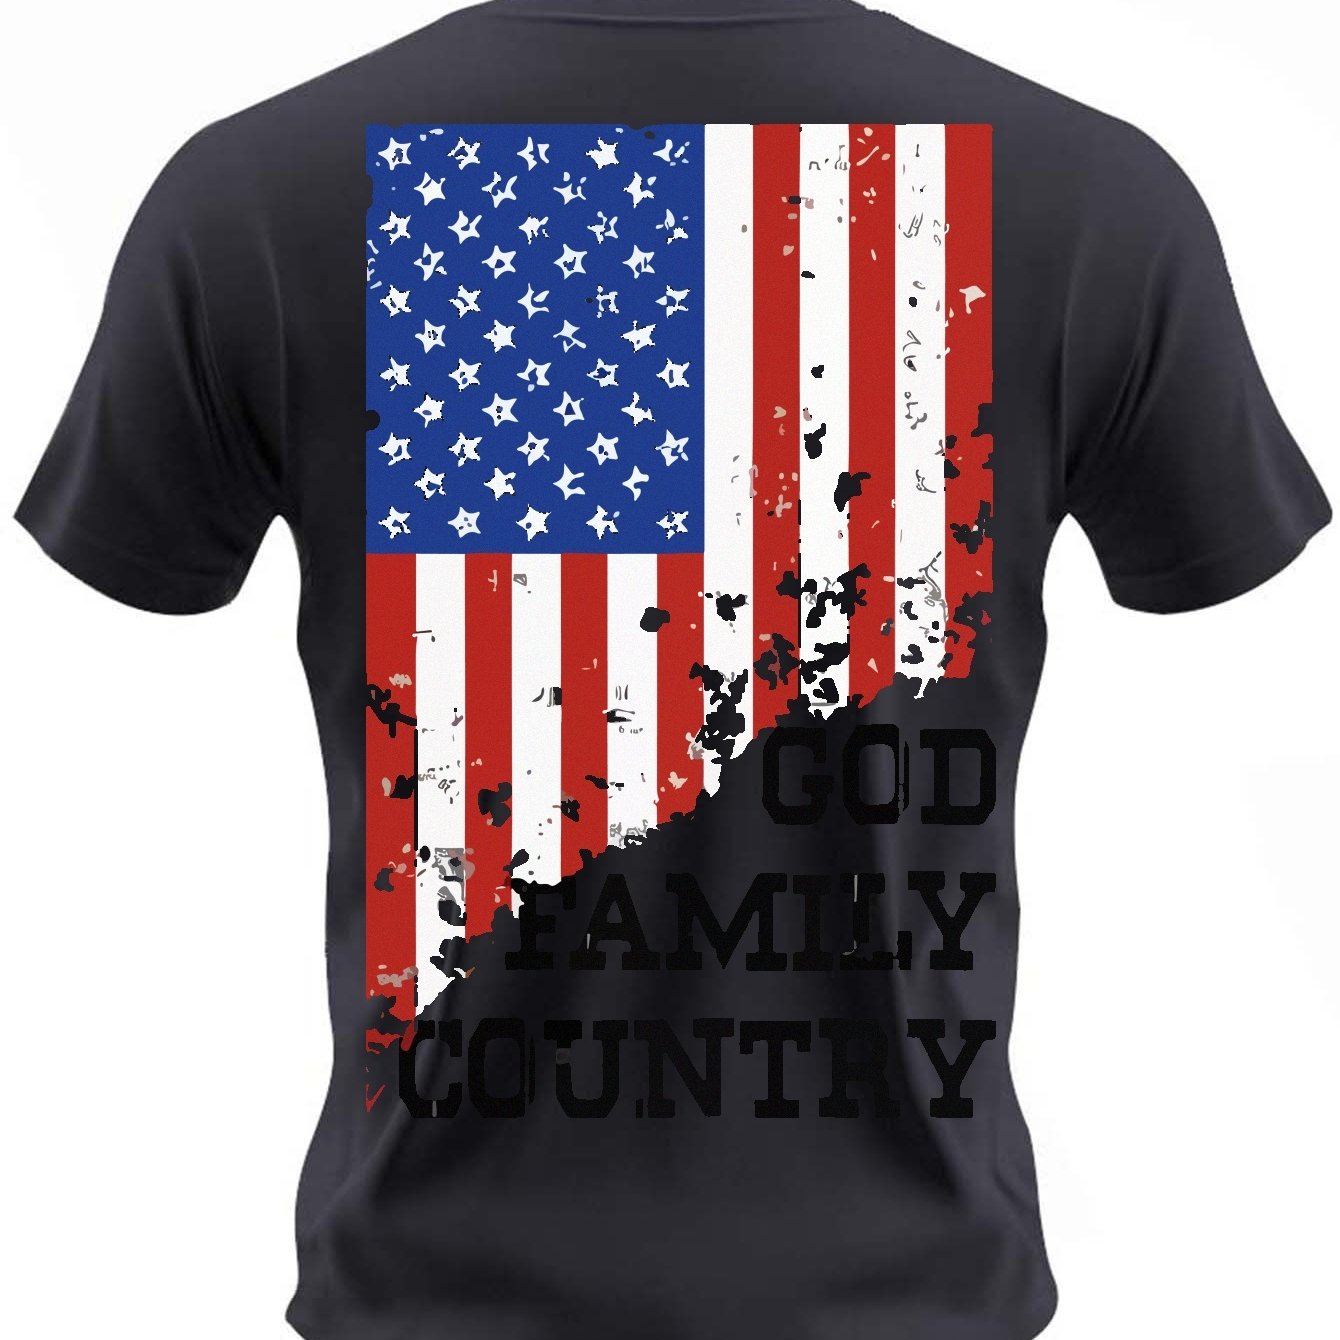 God Family Country Patriotic American Flag Plus Size Men's Christian T-shirt claimedbygoddesigns